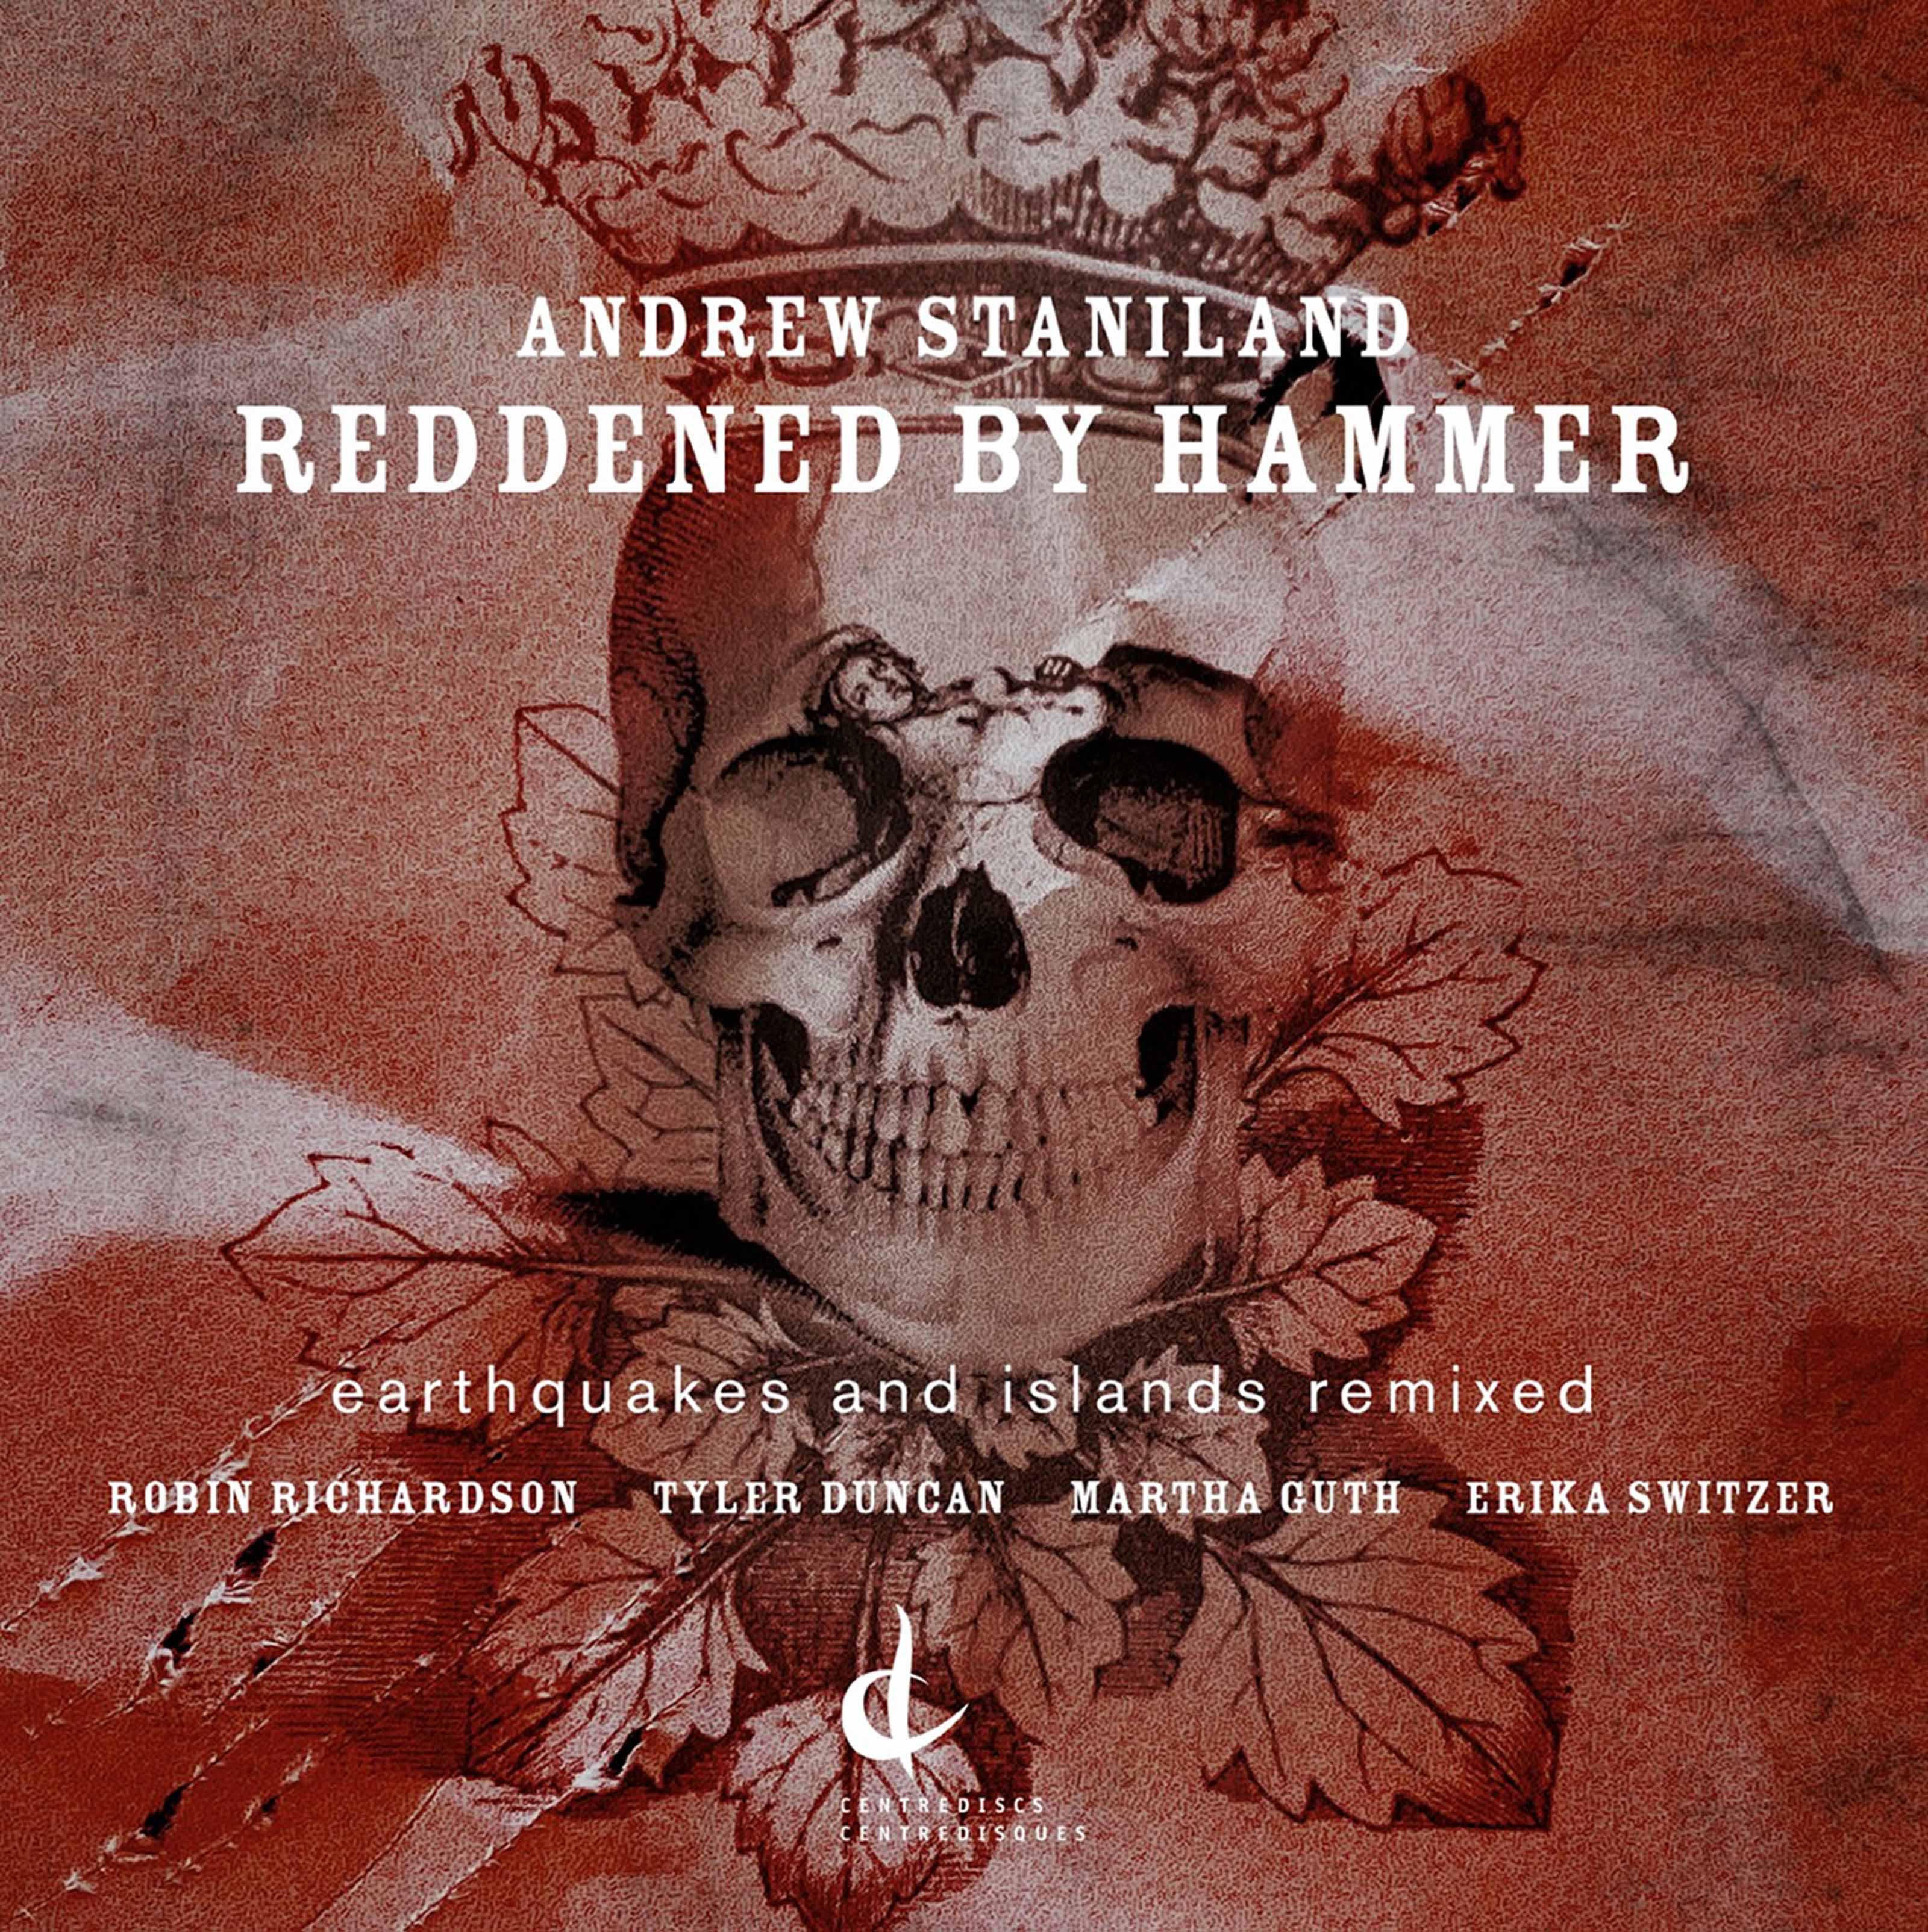 Andrew Staniland - Reddened by Hammer (Andrew Staniland Remix)